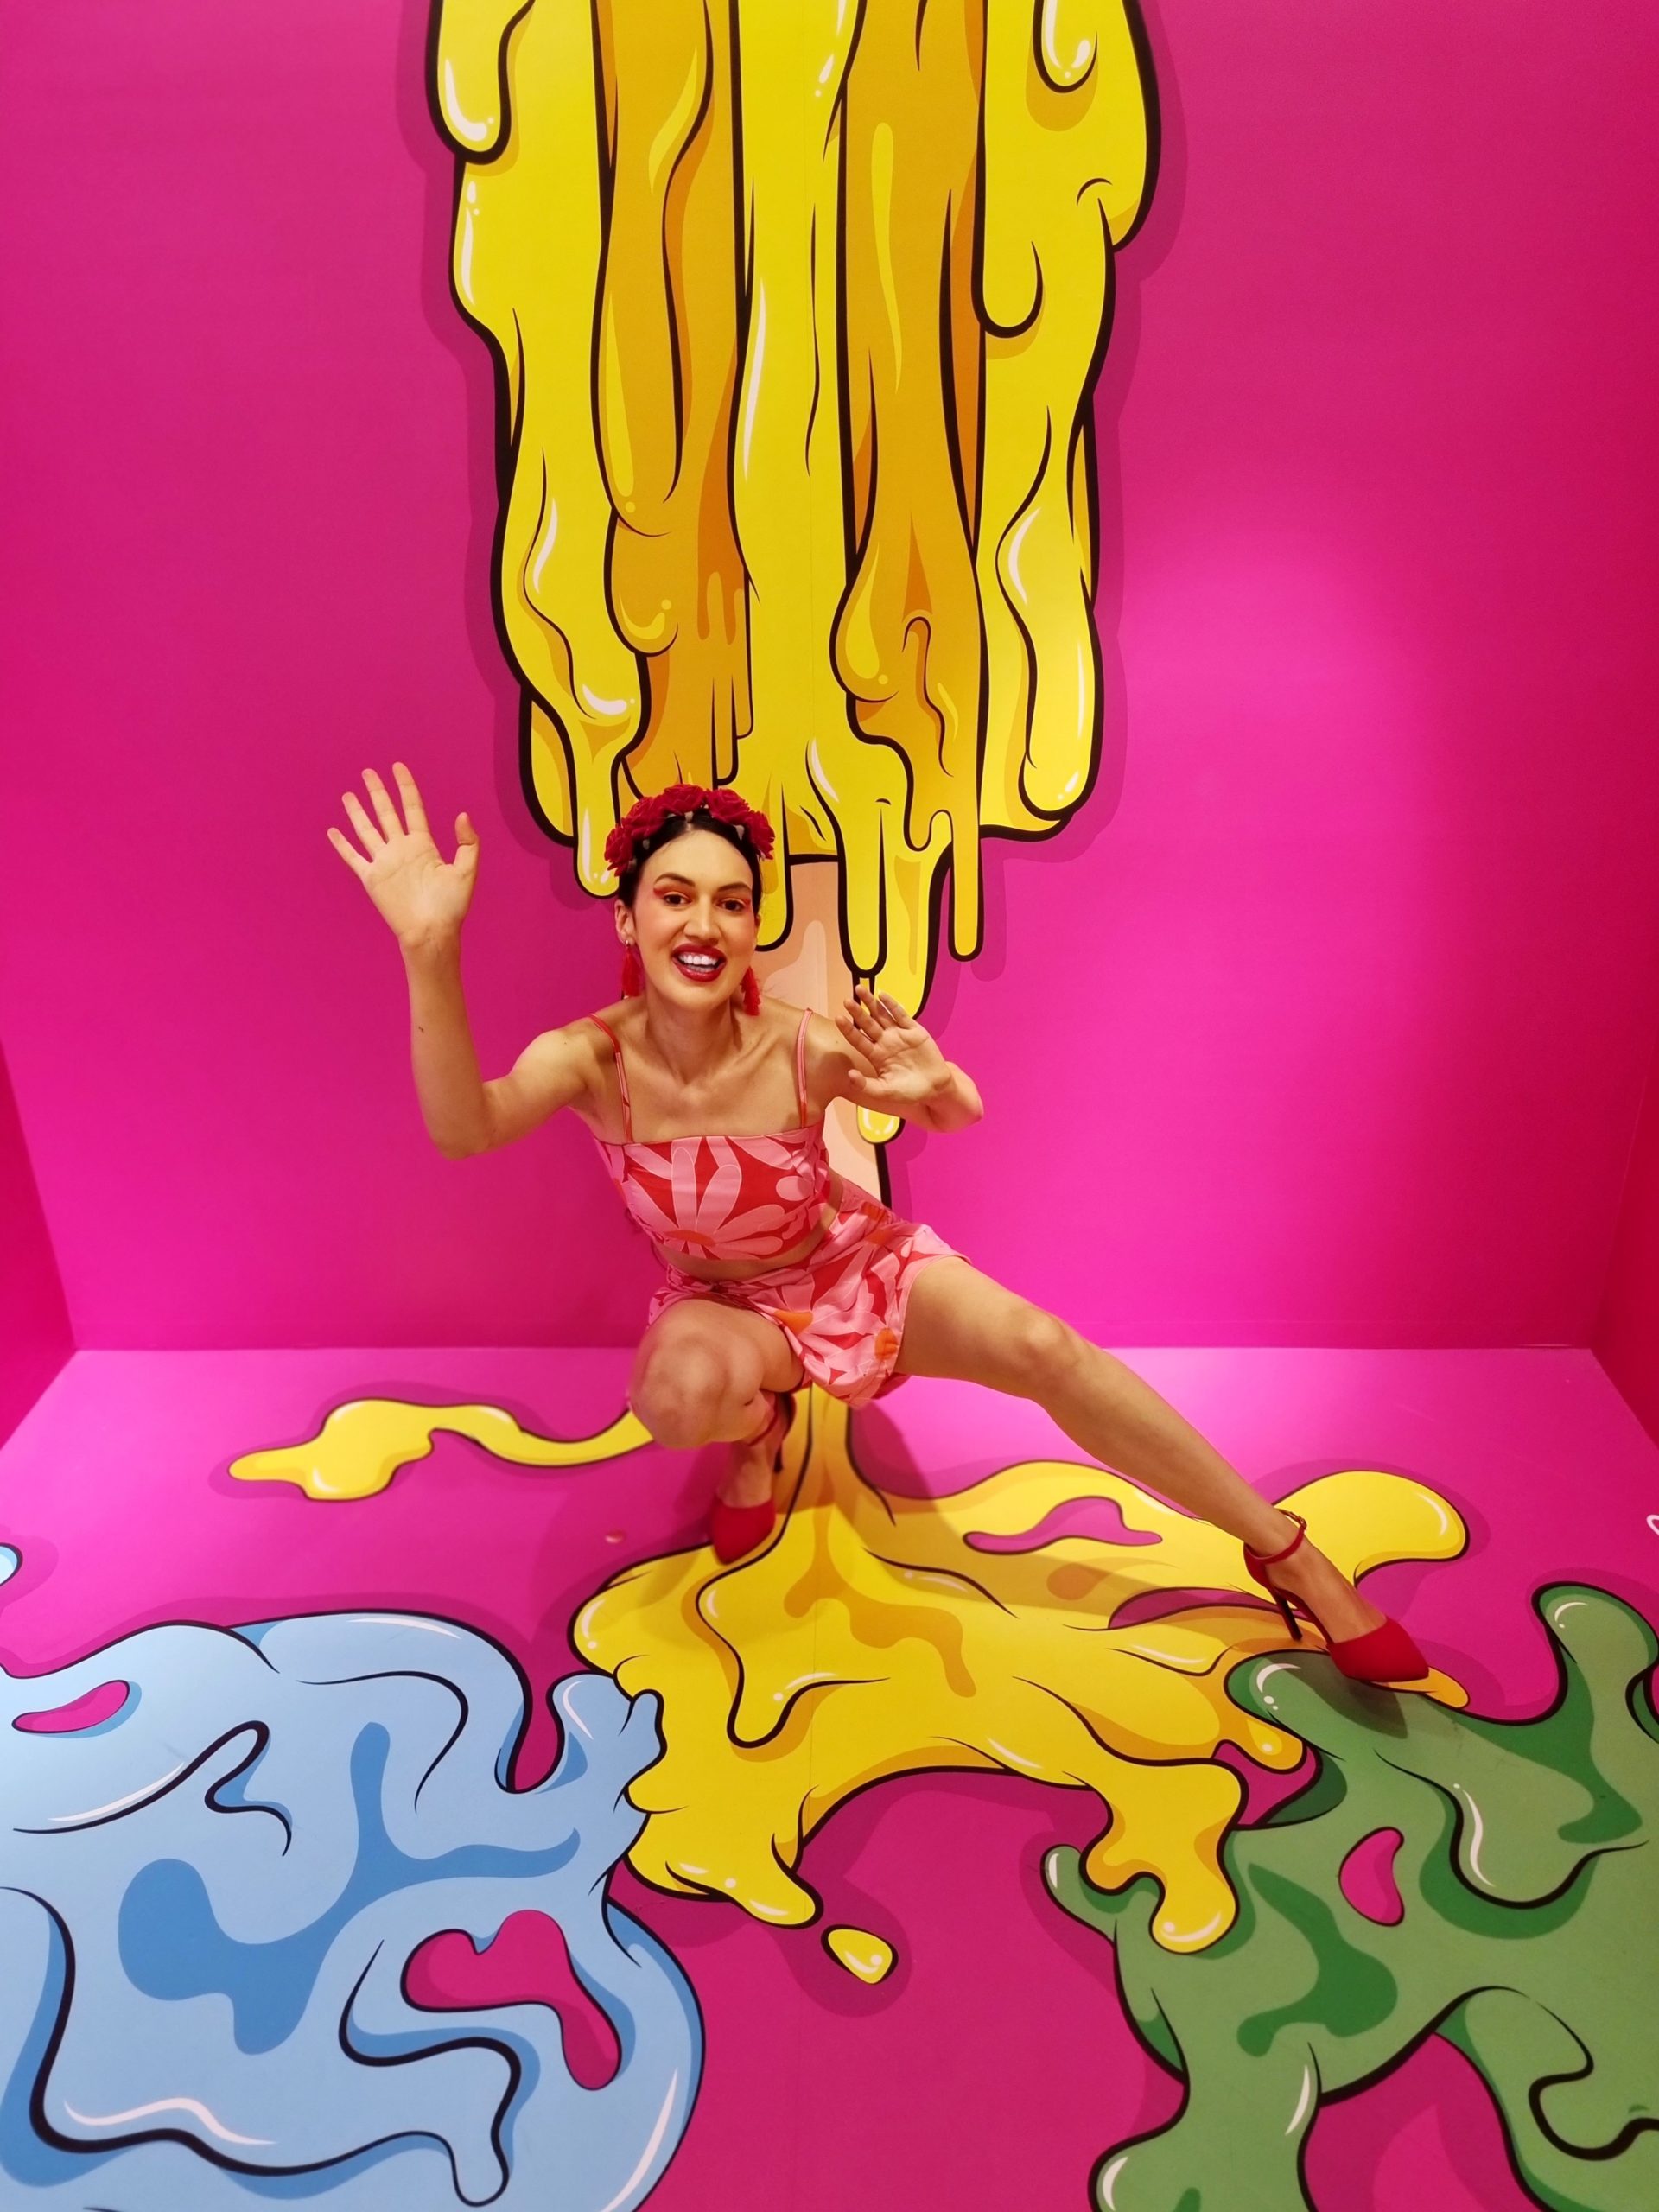 <img src="ana.jpg" alt="ana in surreal paint swirl selfie room"/> 